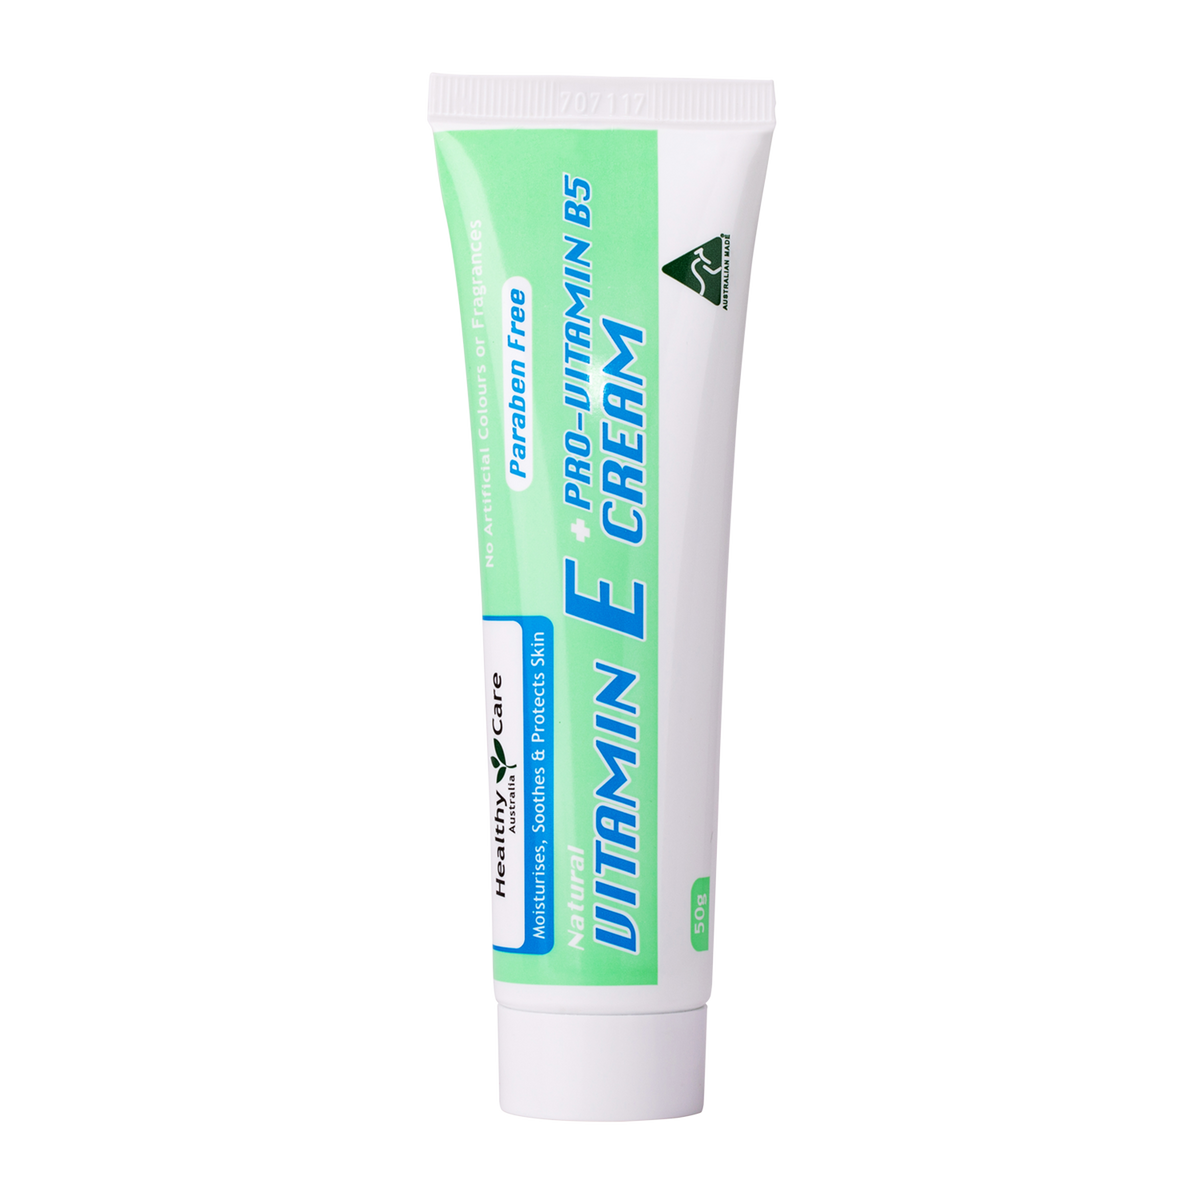 Vitamin E + Pro-Vitamin B5 Cream 50g Tube-Lotion & Moisturizer-Healthy Care Australia